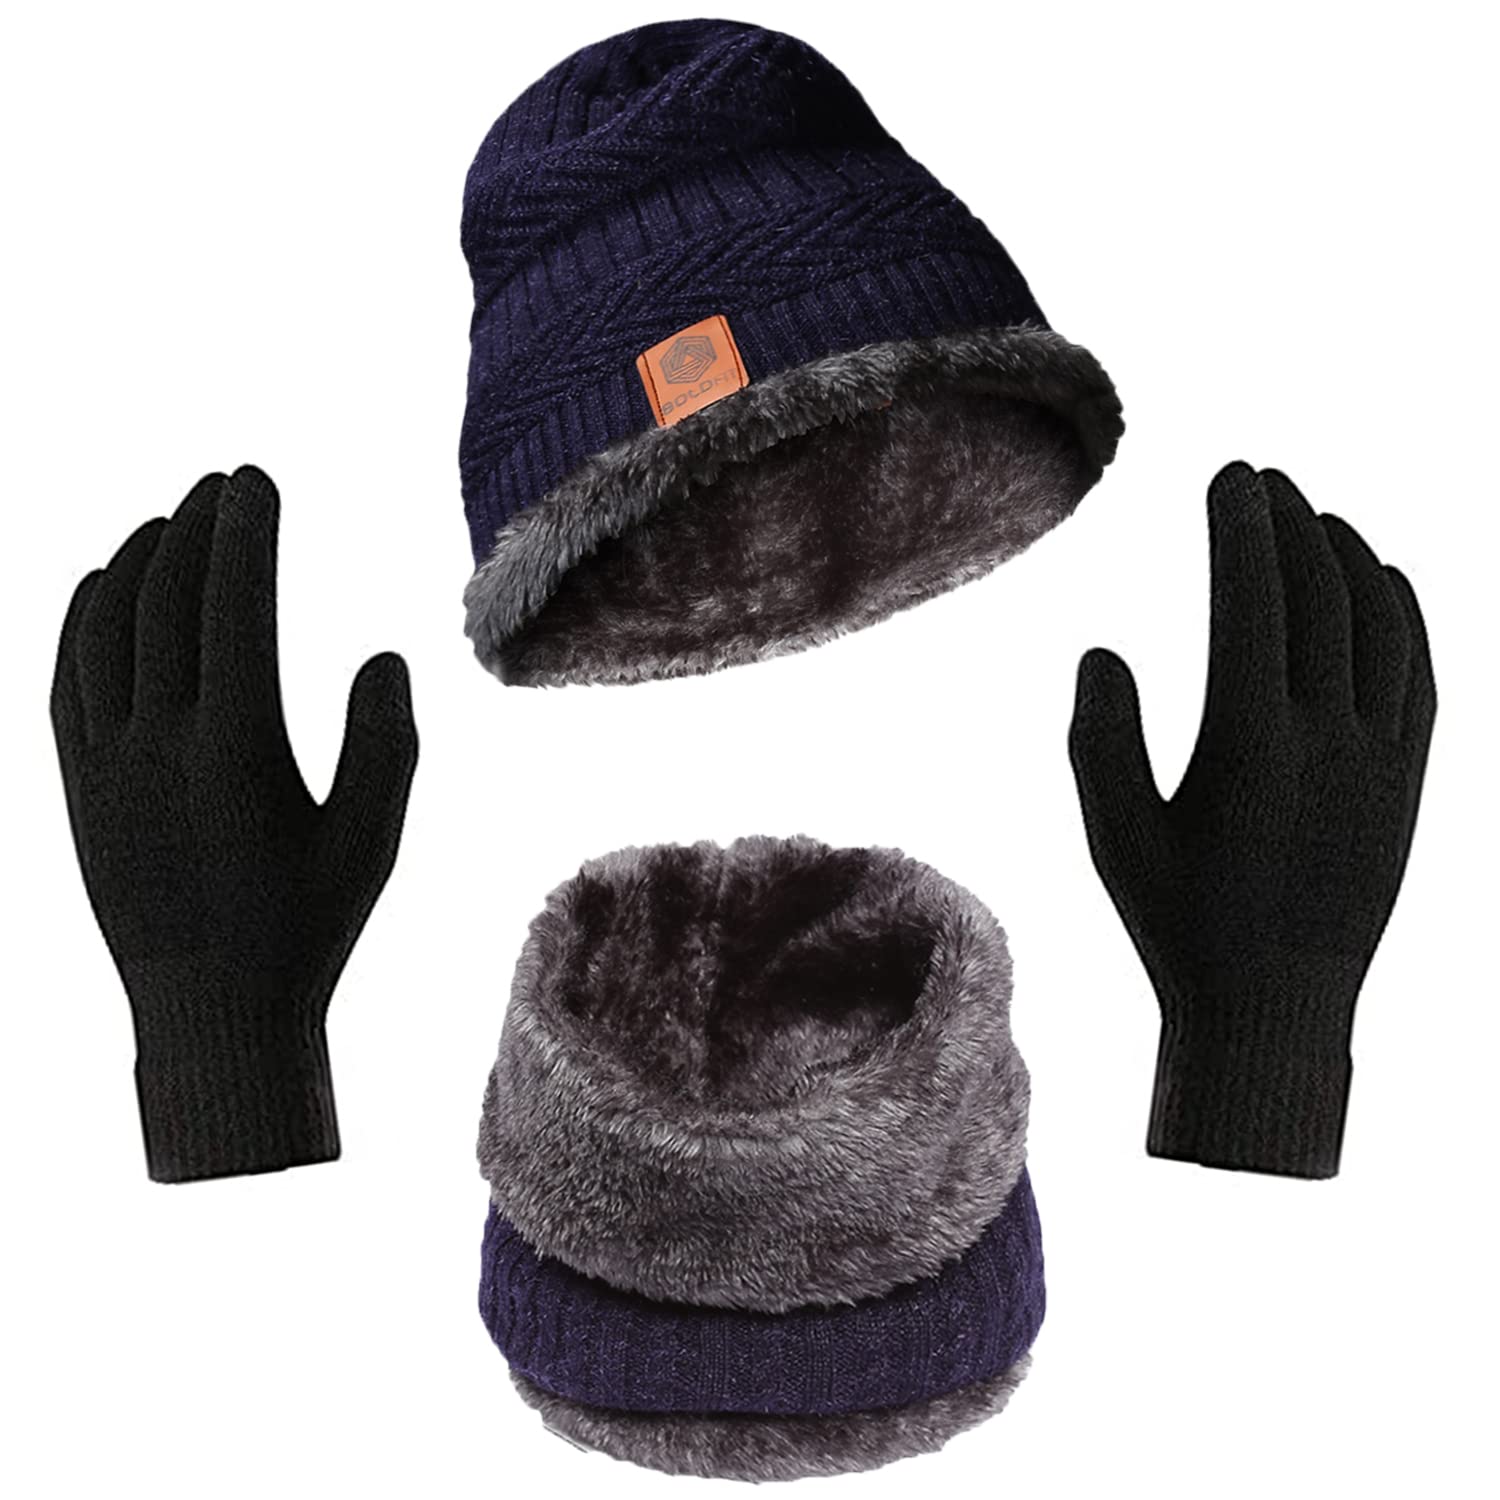 Winter cap with Neck & Gloves Wear